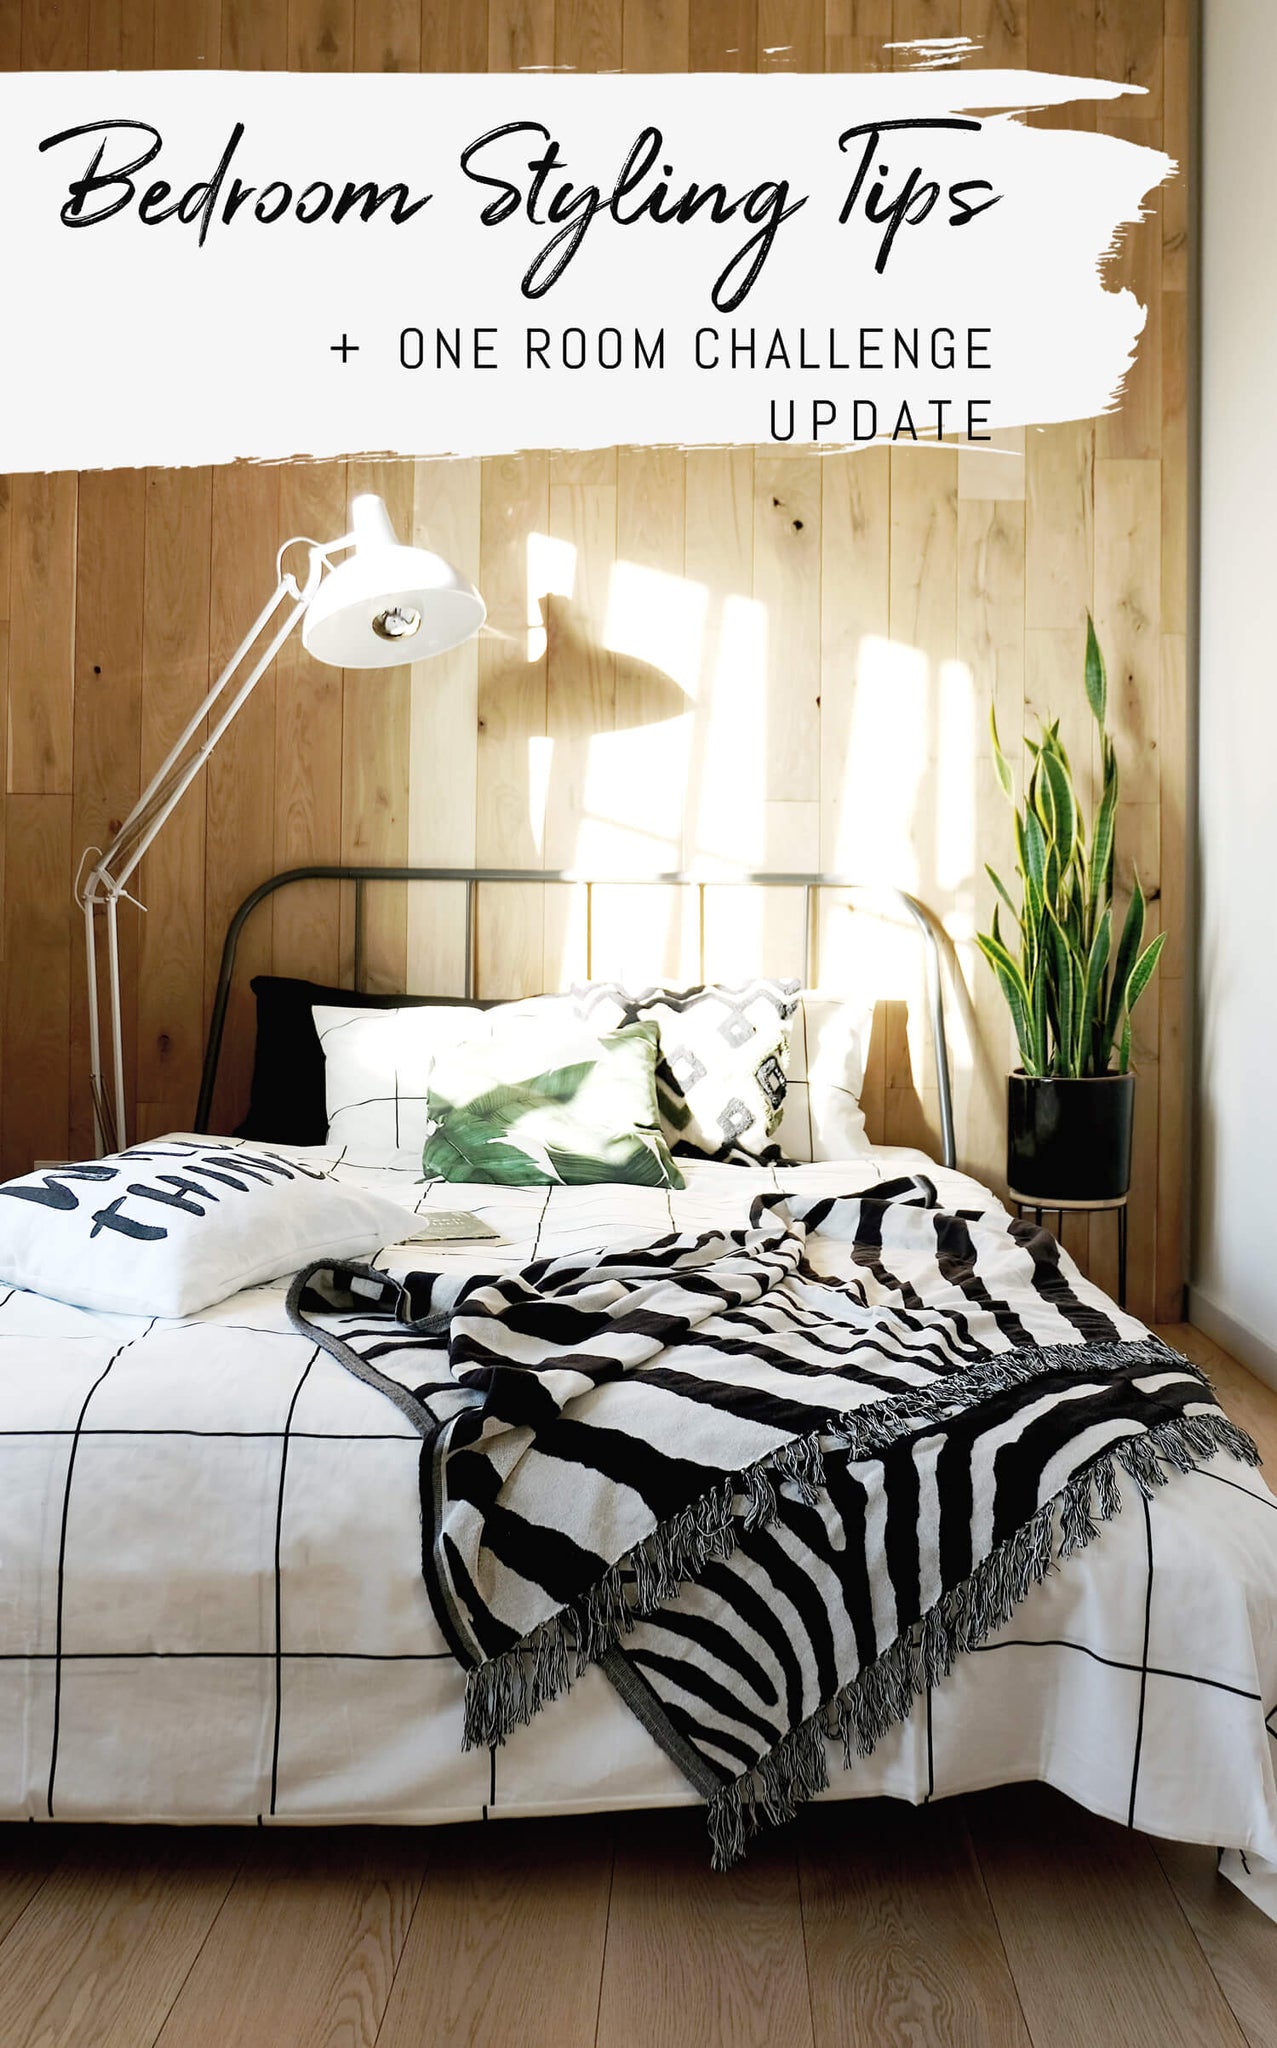 One Room Challenge 2019, Modern bohemian bedroom styling tips